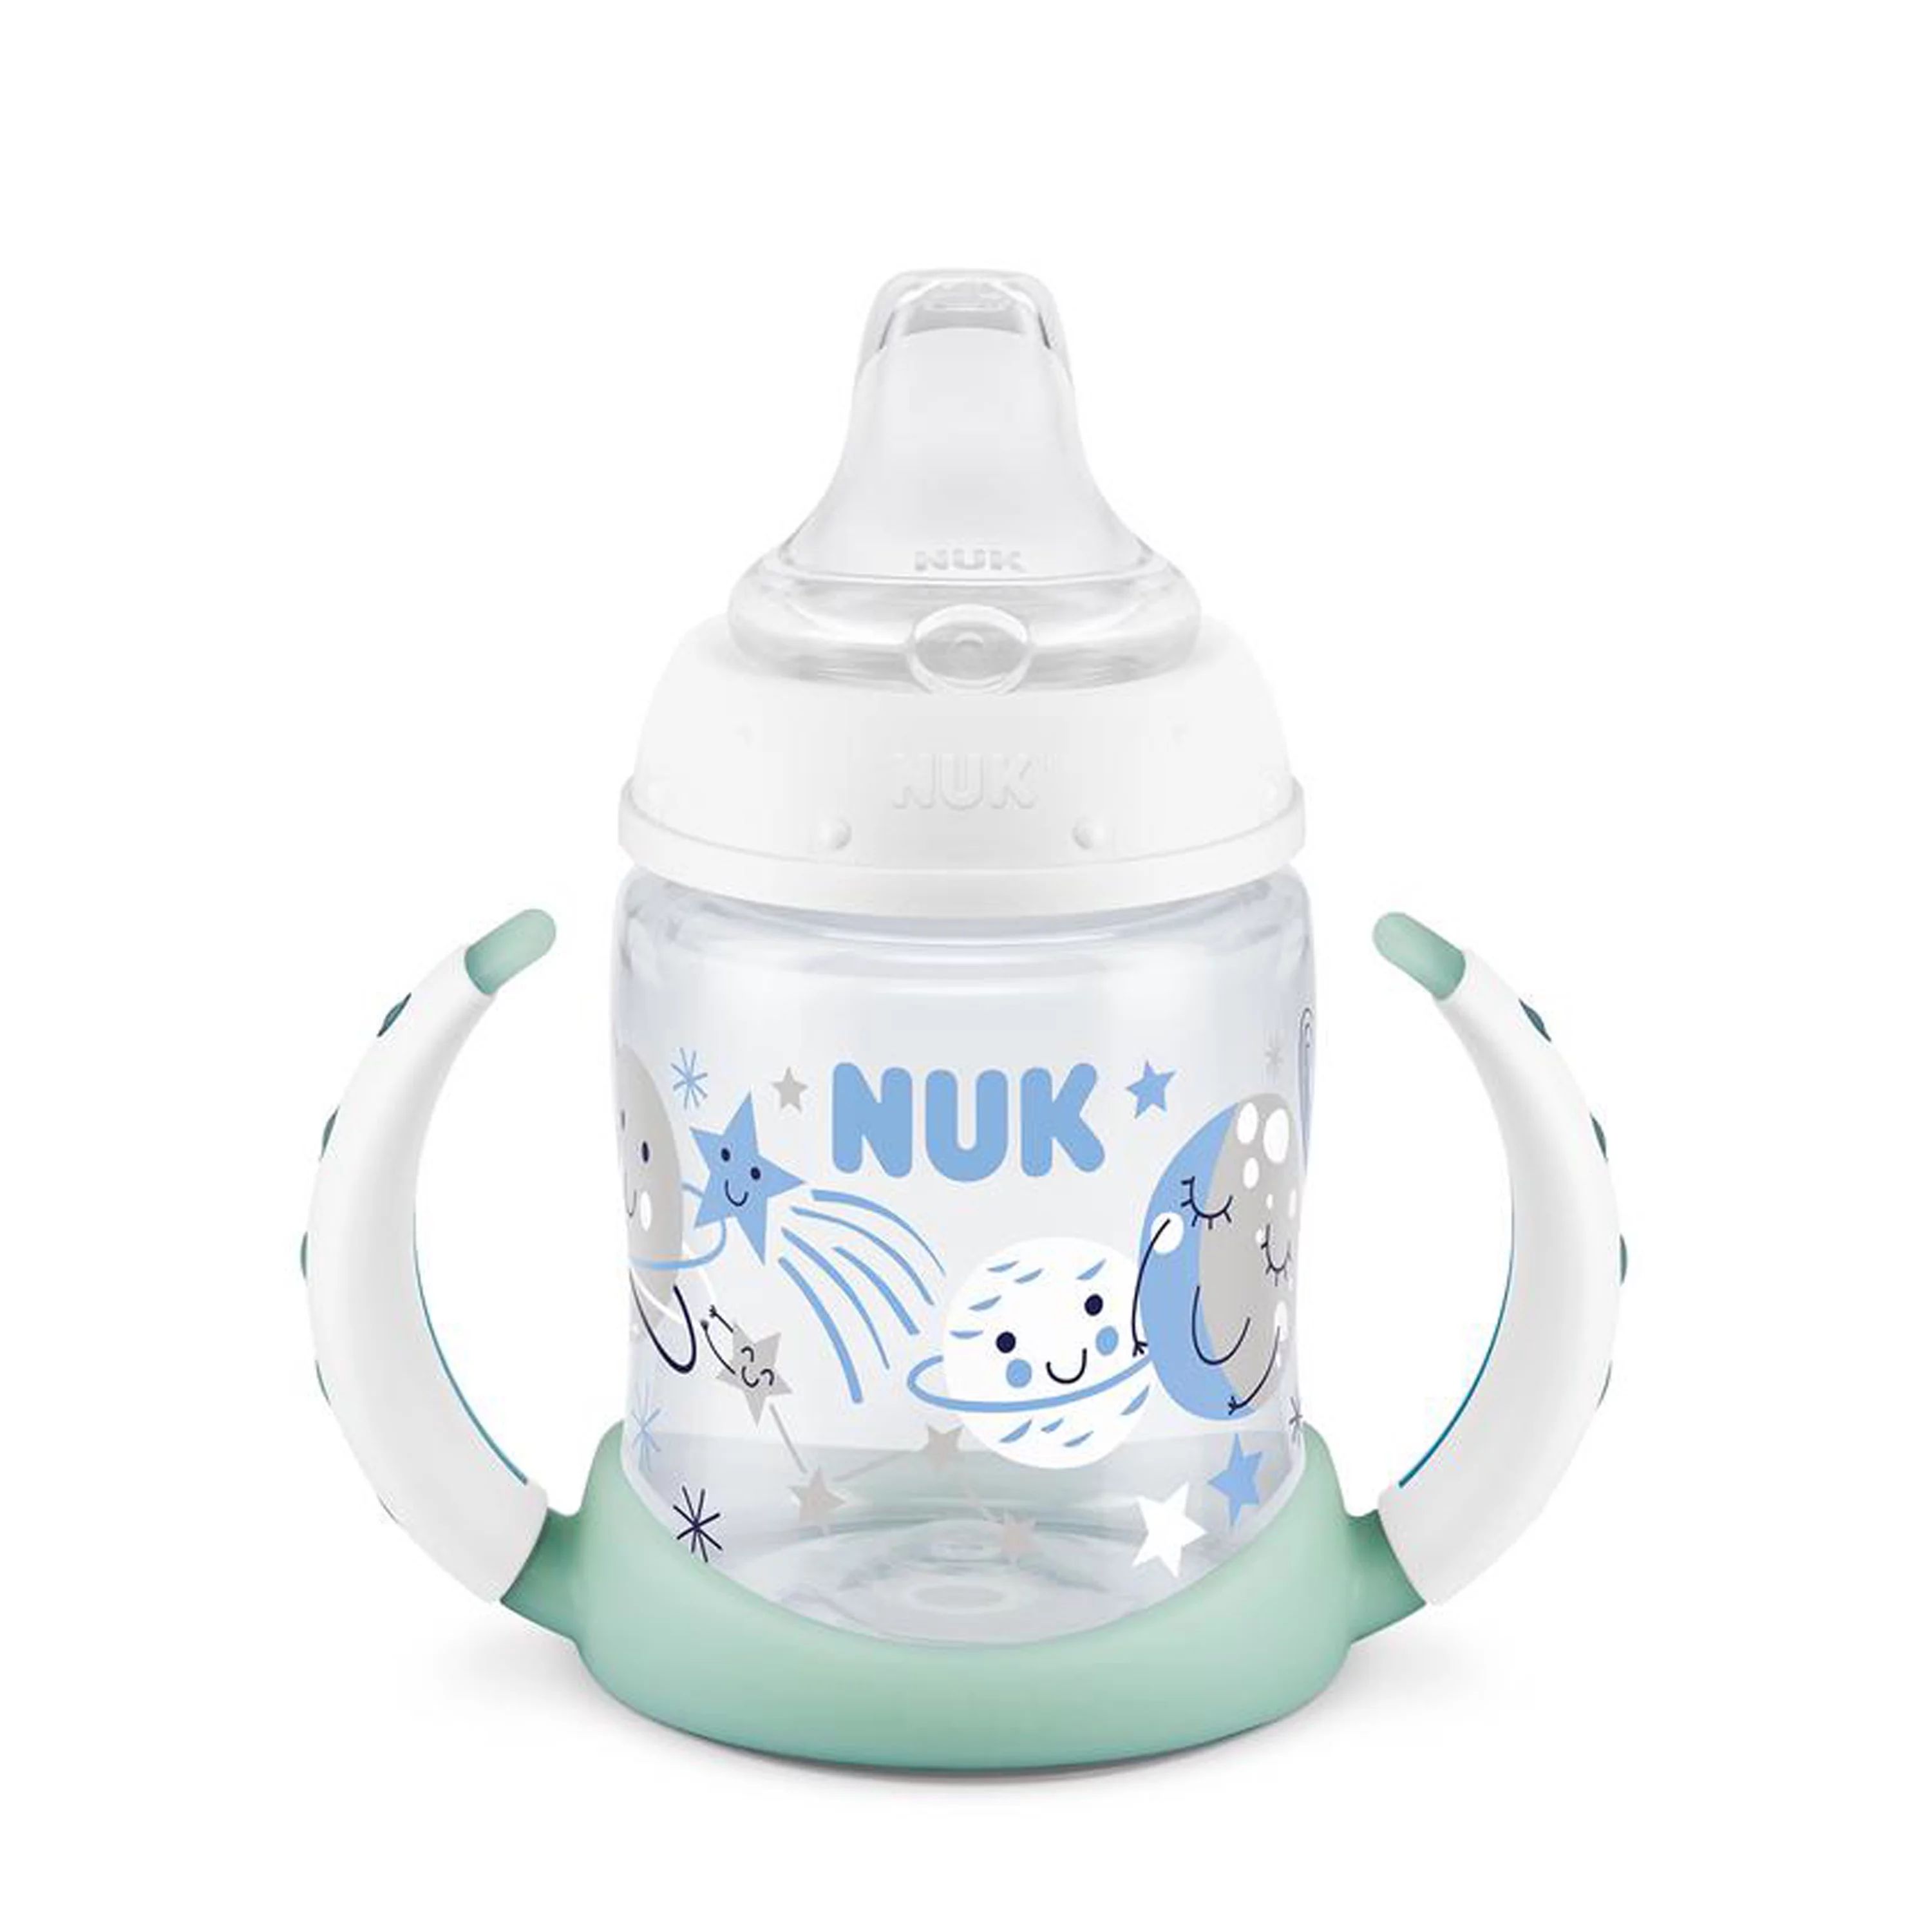 NUK Learner Cup, 5 oz Soft Spout Sippy Cup, 1 Pack, 6+ Months, Neutral, Unisex | Walmart (US)